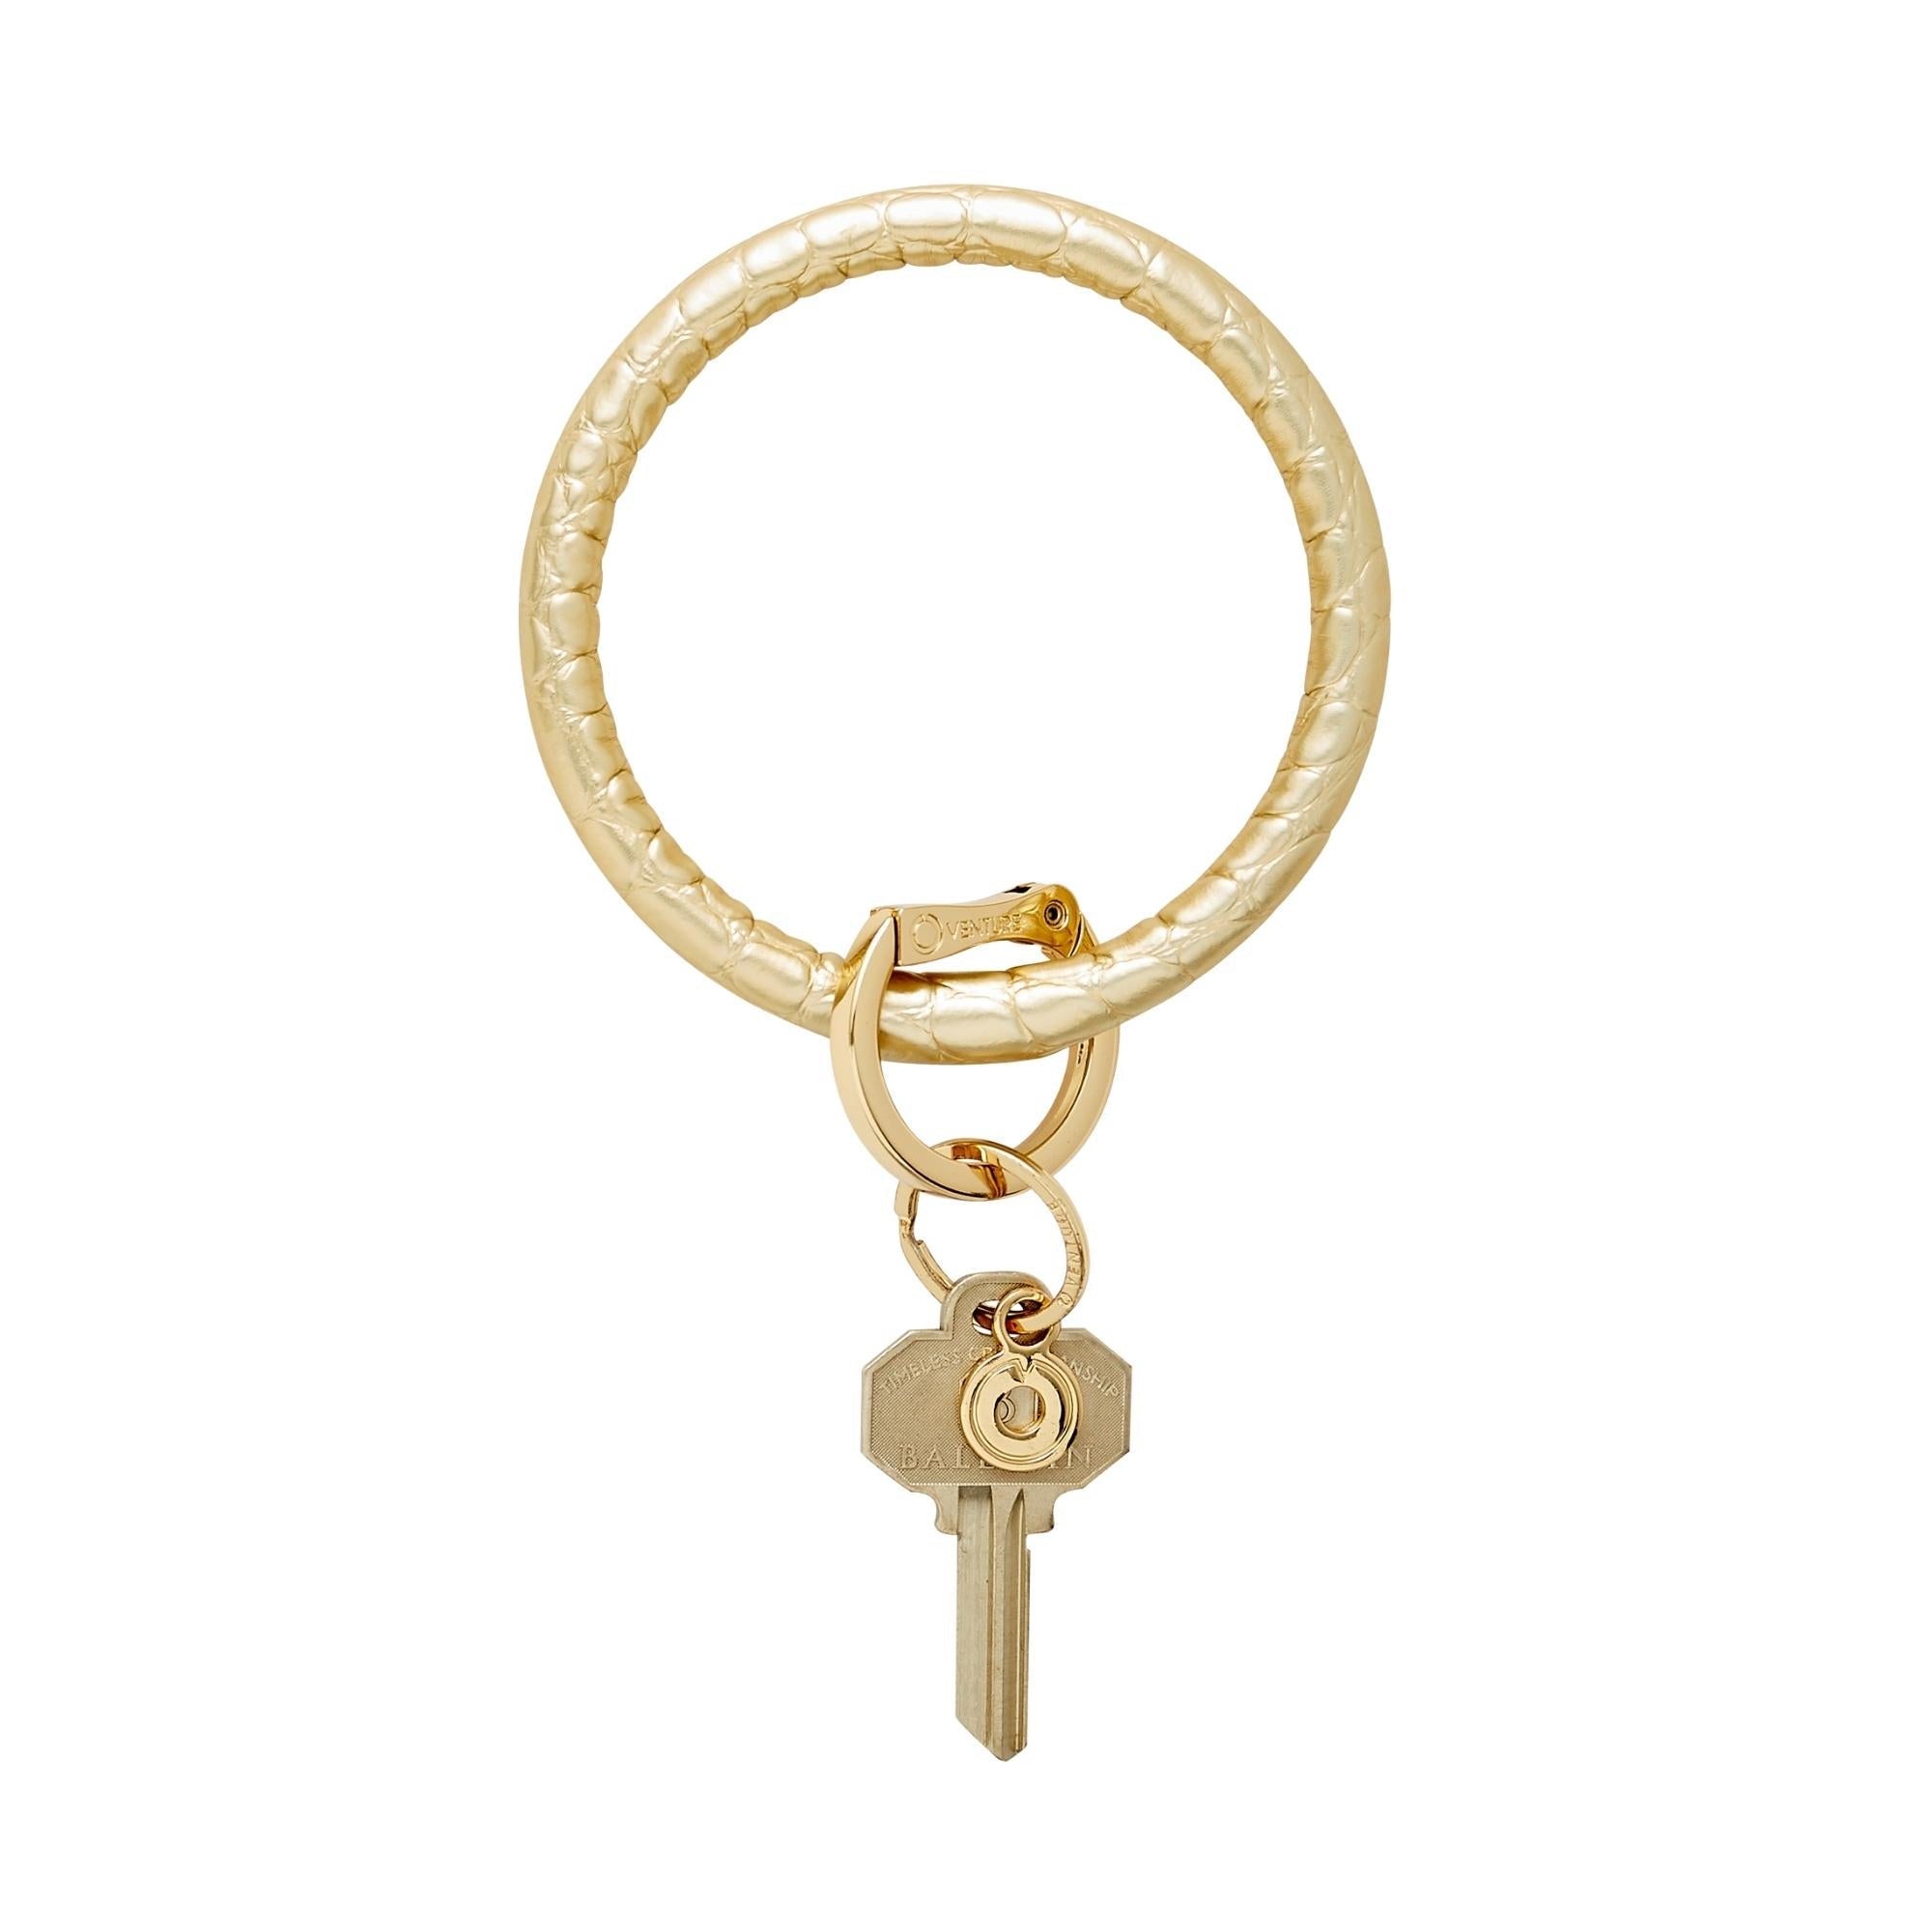 Key Chain Large Ring, Keychain Keyring Large, Combination Keychain